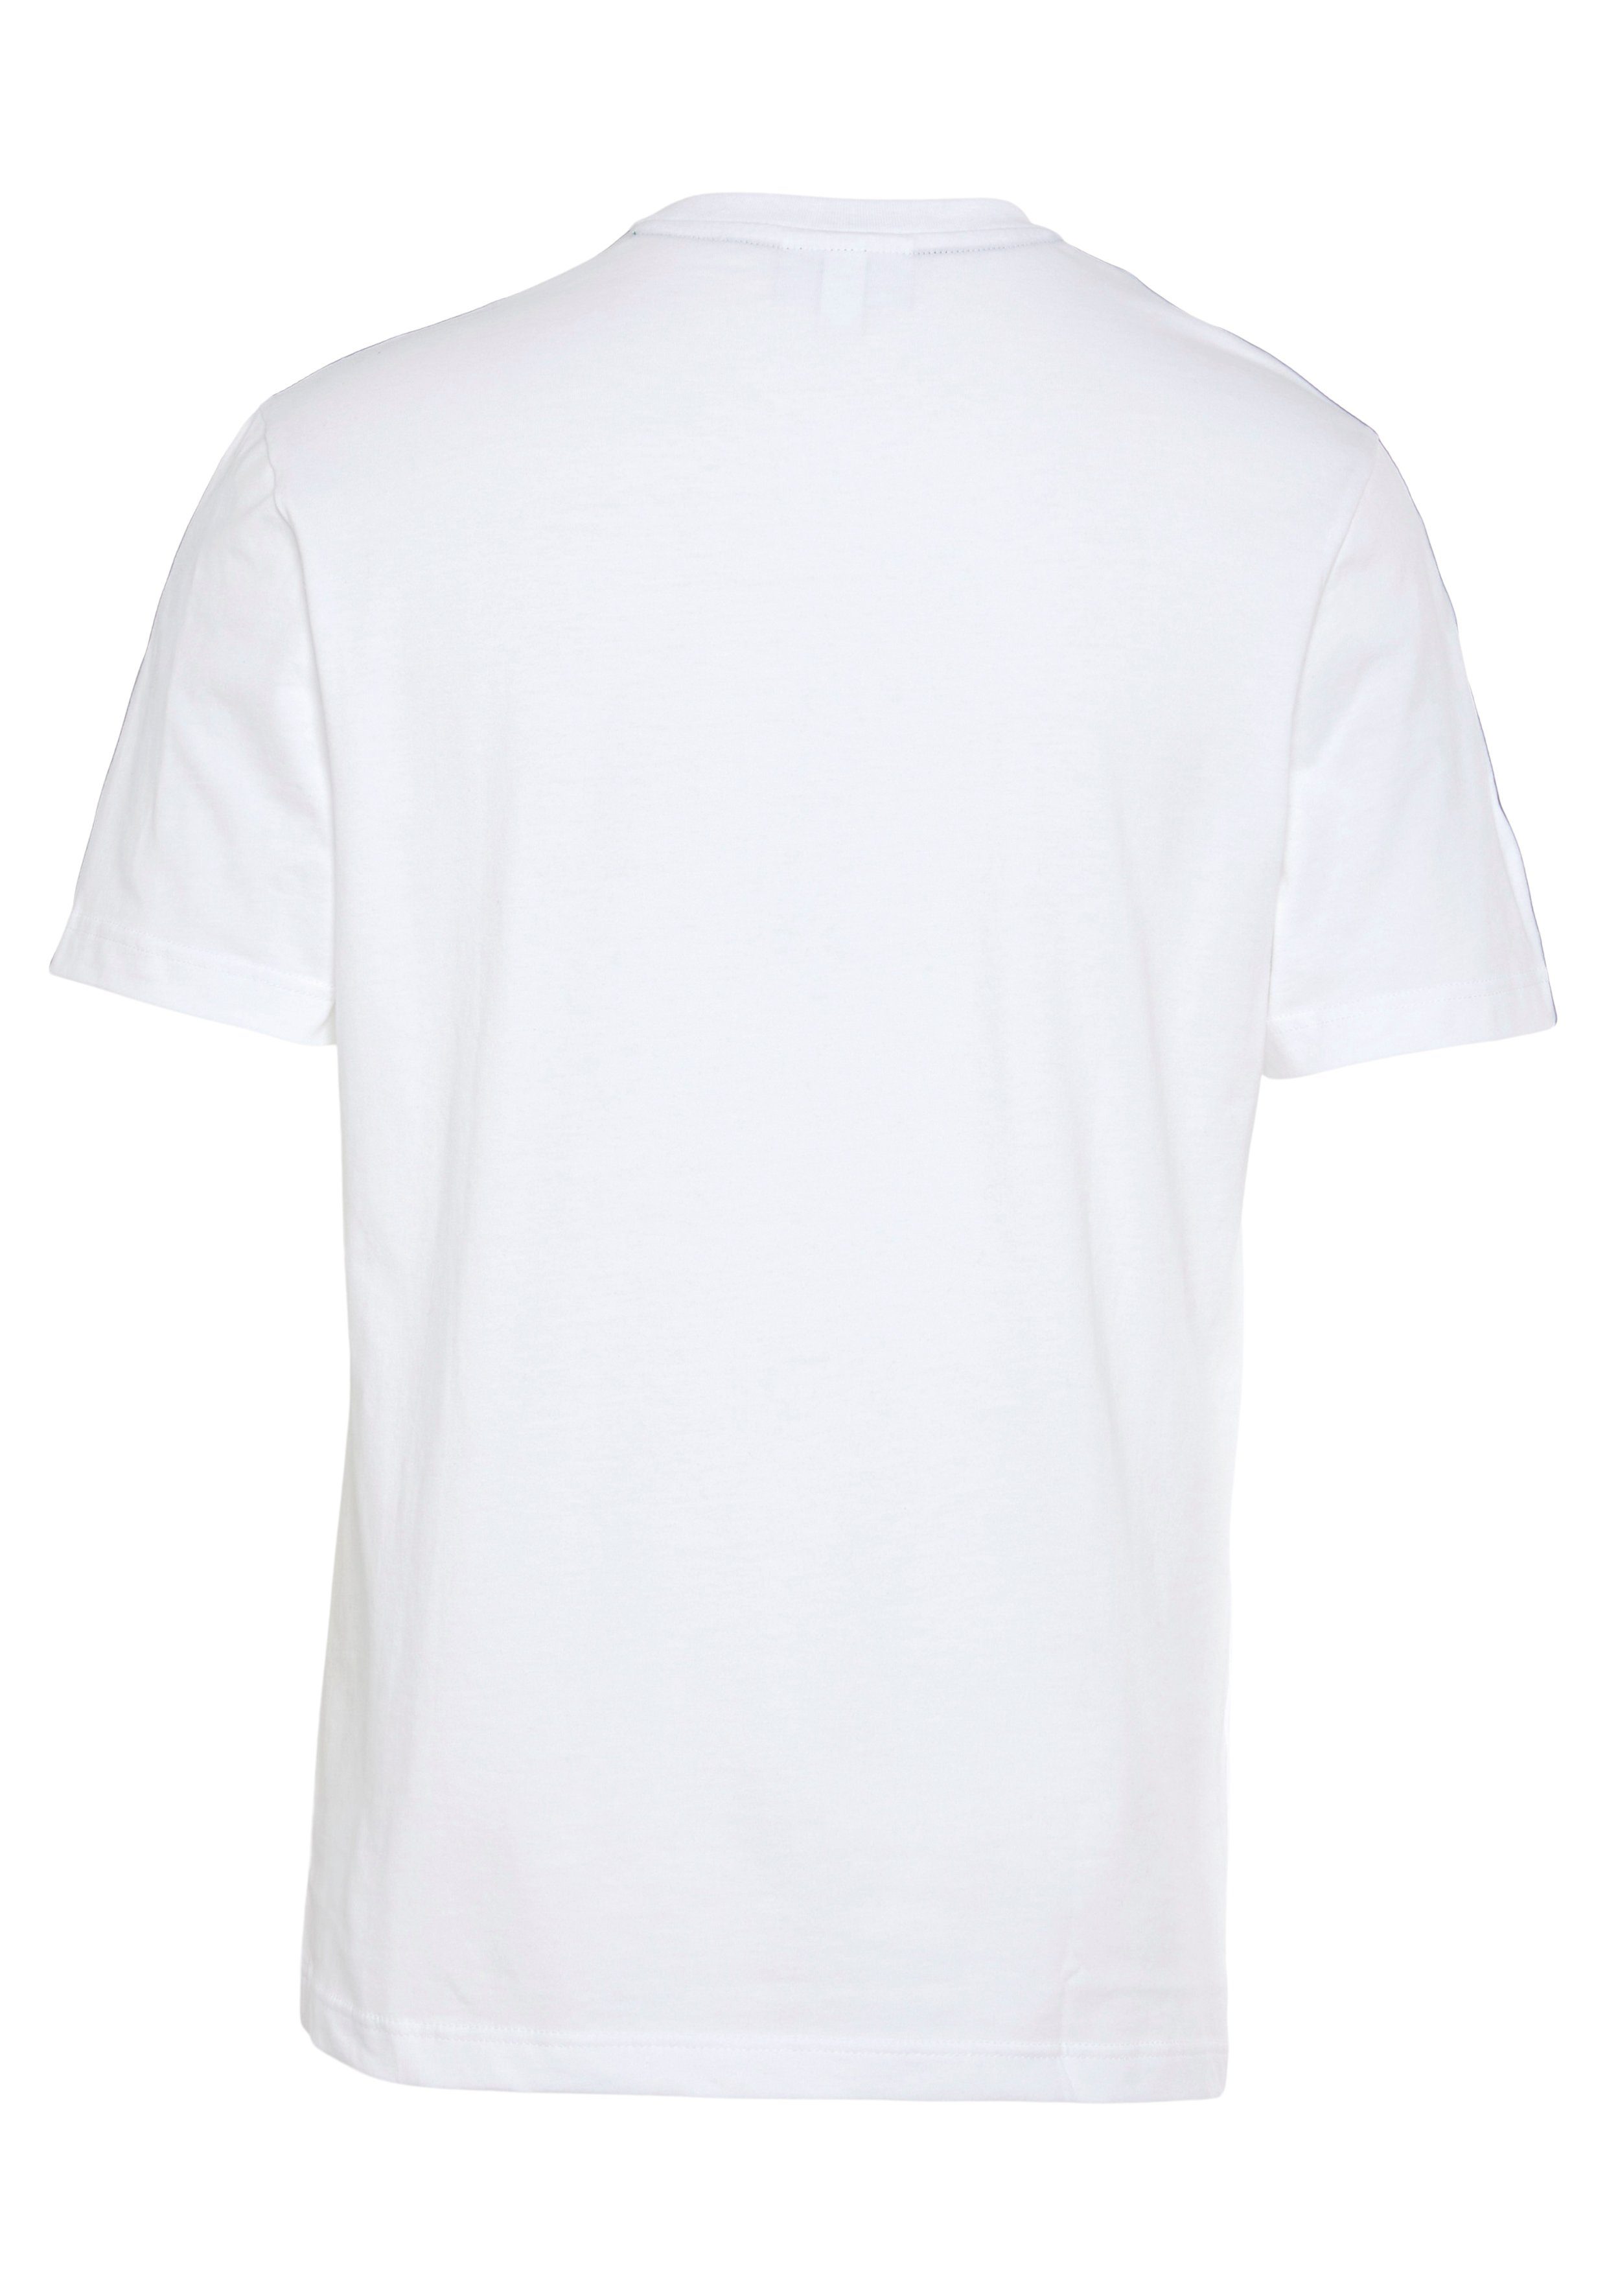 beschriftetem mit white Lacoste an Kontrastband den Schultern T-Shirt